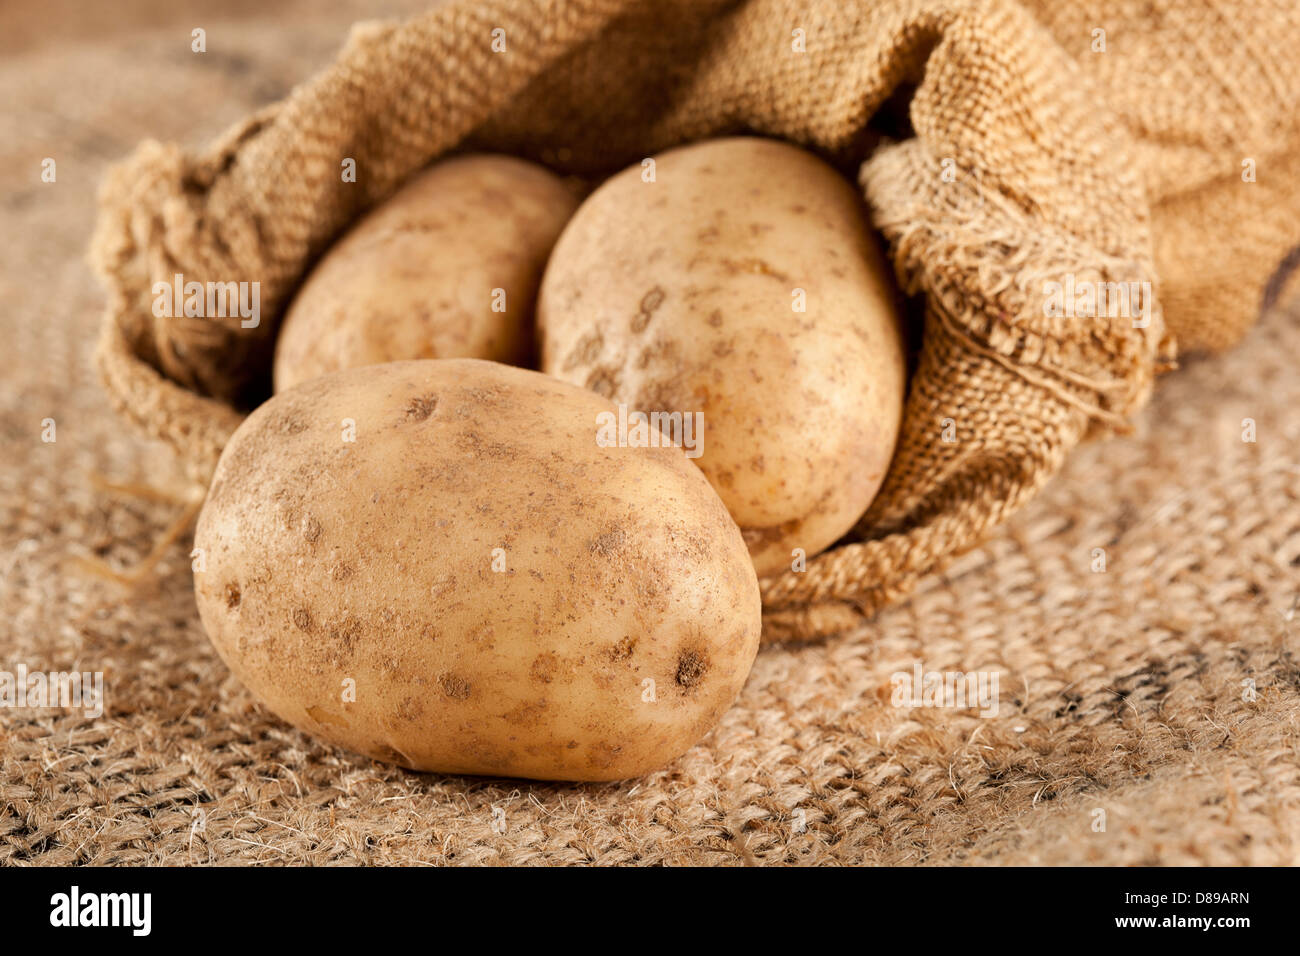 Fresh Organic Whole Potato on a background Stock Photo